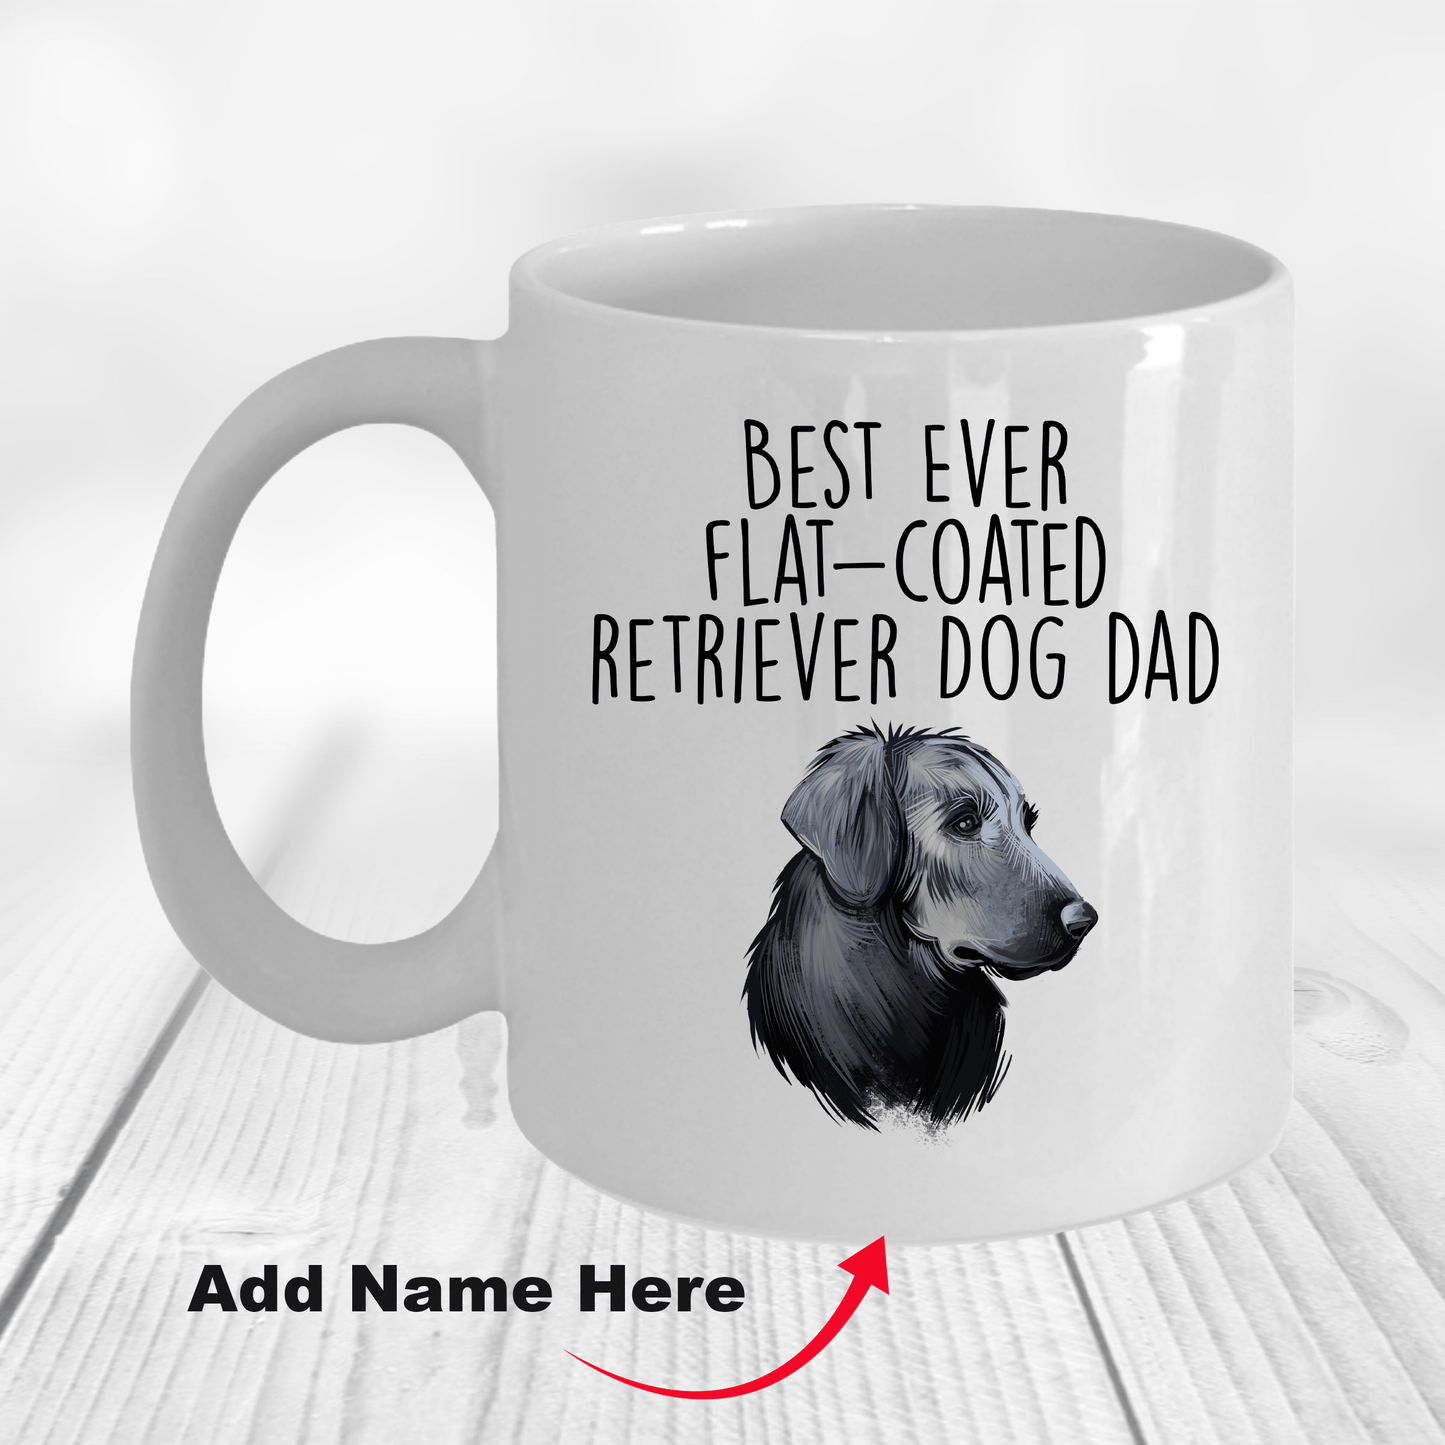 Best Ever Flat-Coated Retriever Dog Dad Ceramic Coffee Mug